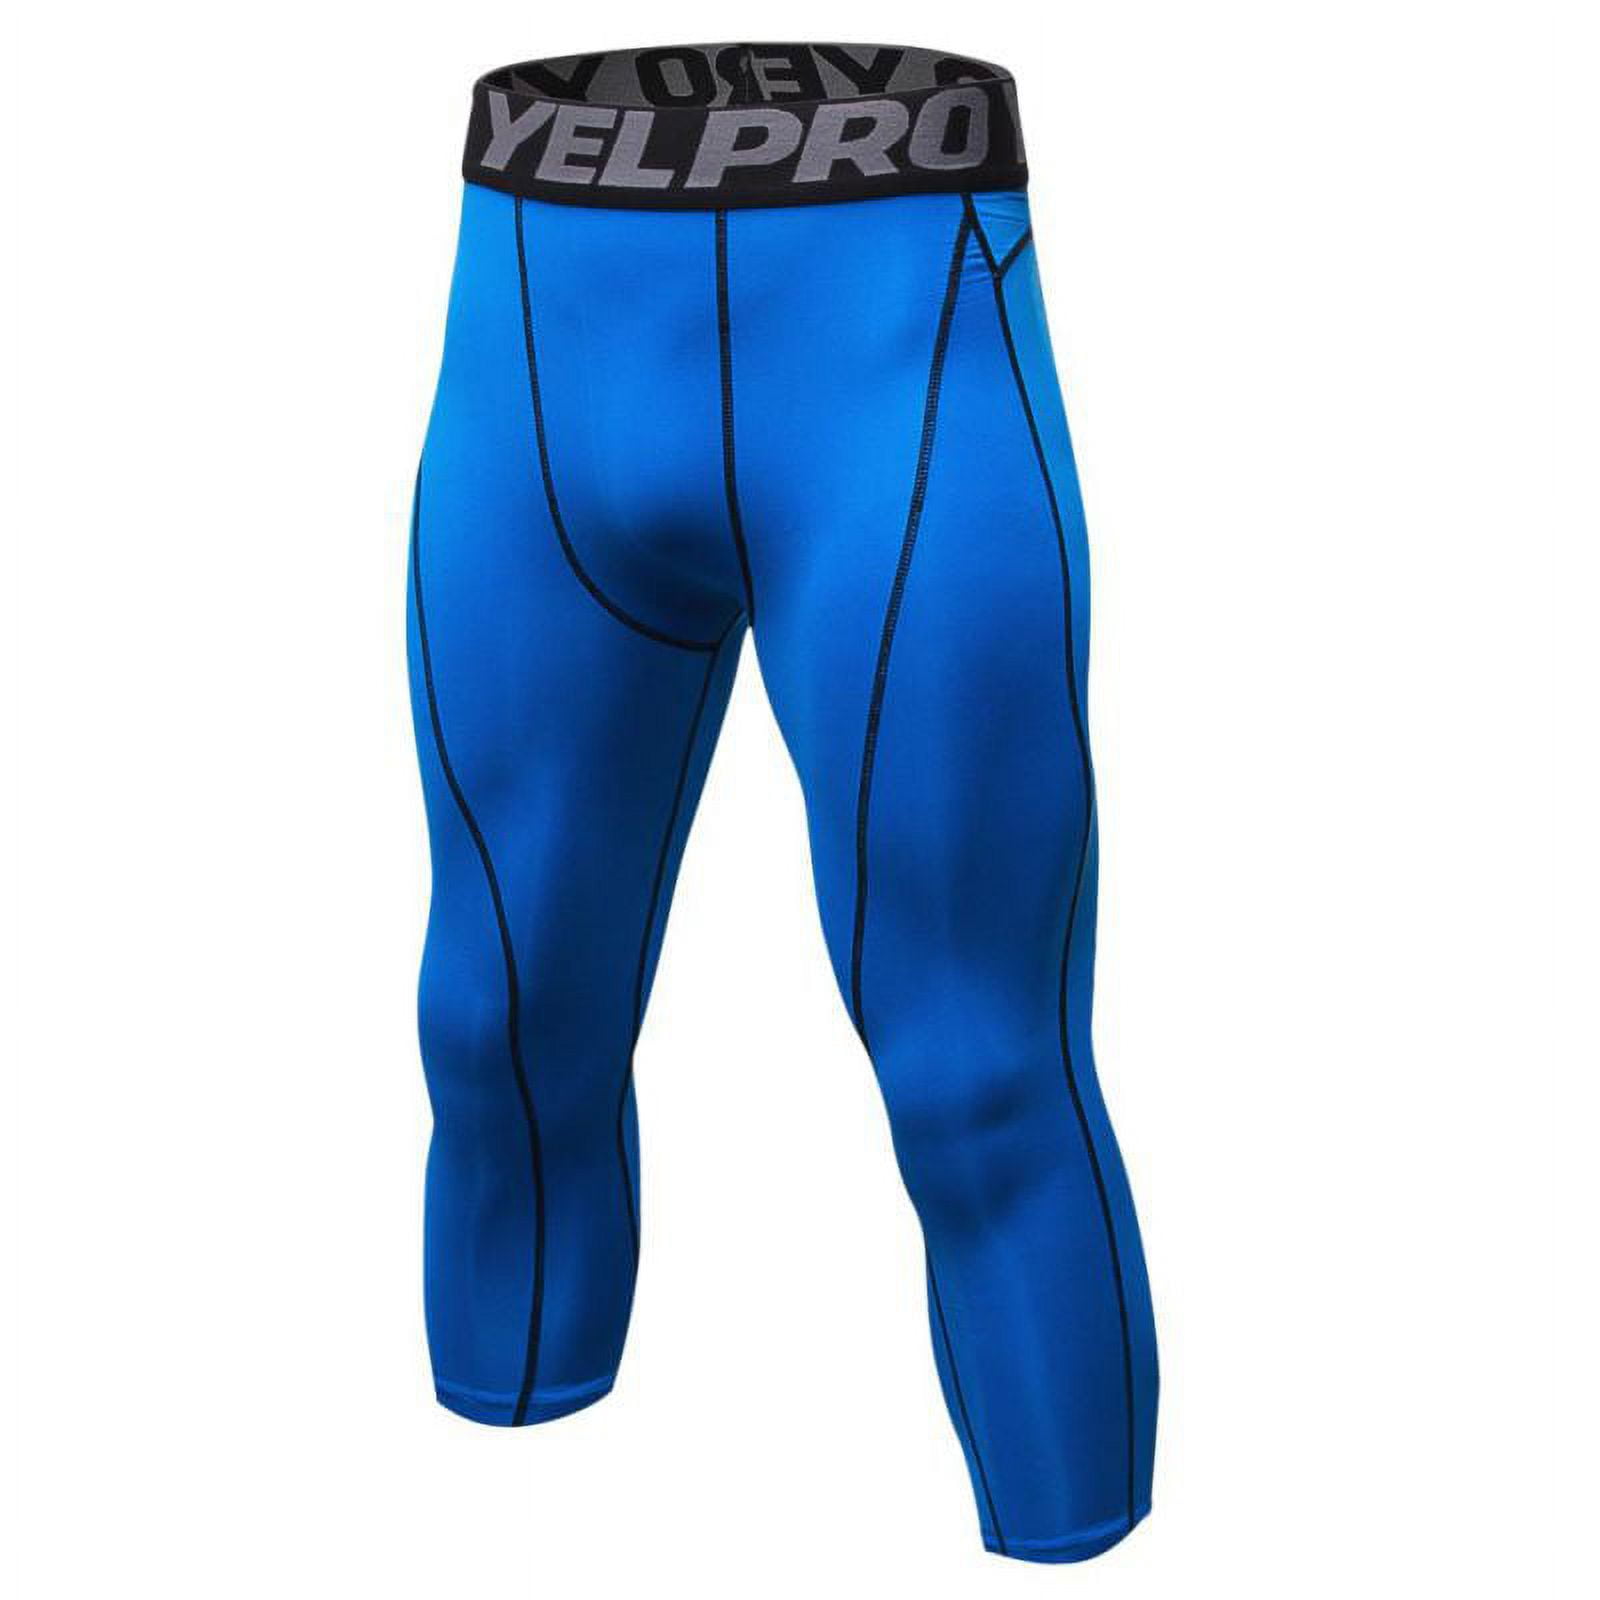 Neleus Pro Gray Compression Pants Shorts Athletic Sports Running Size L